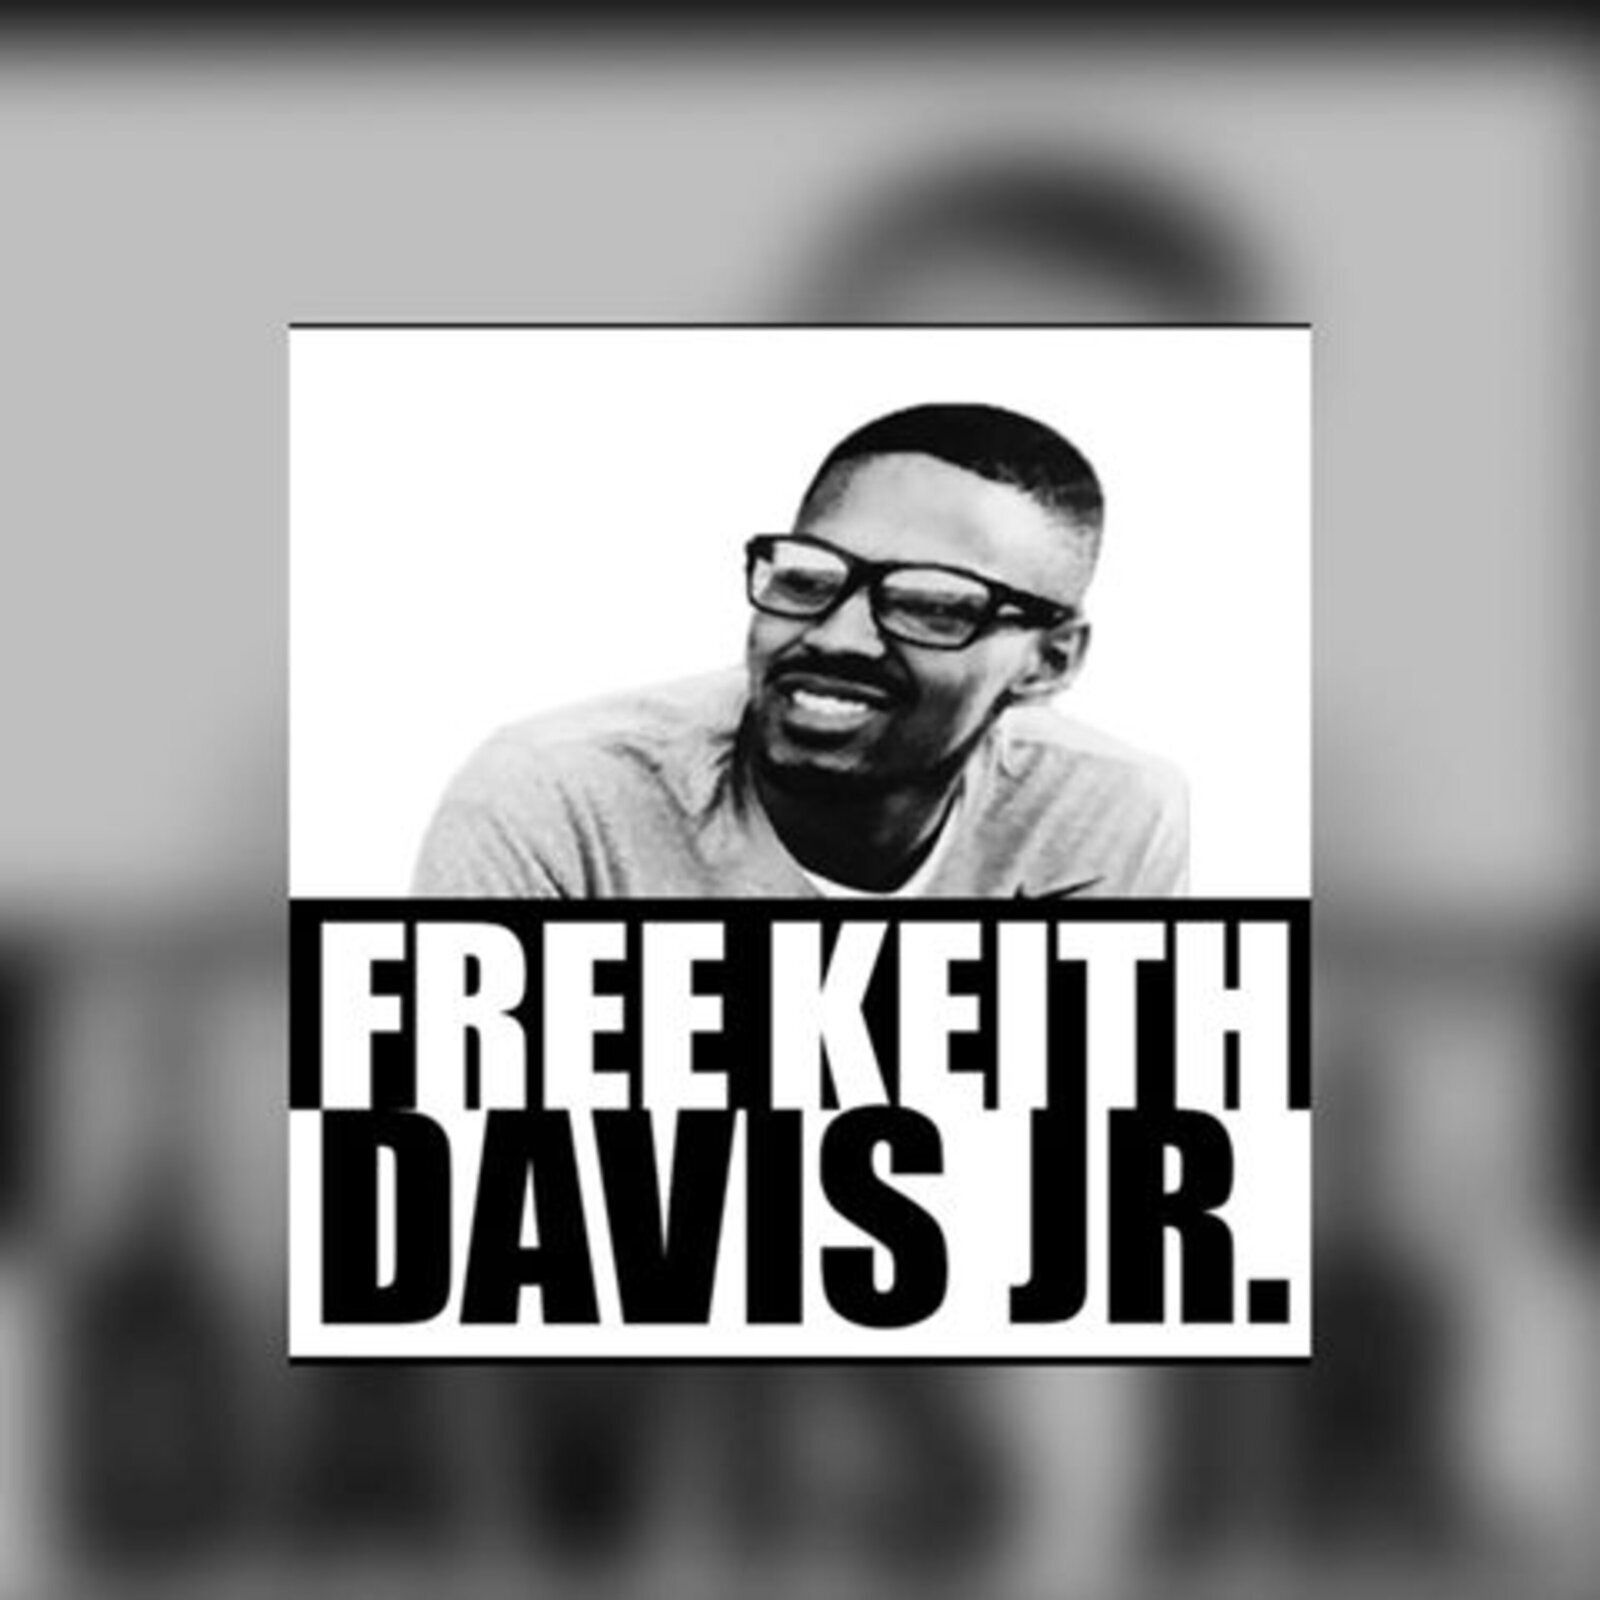 State v. Keith Davis Jr. – The Latest